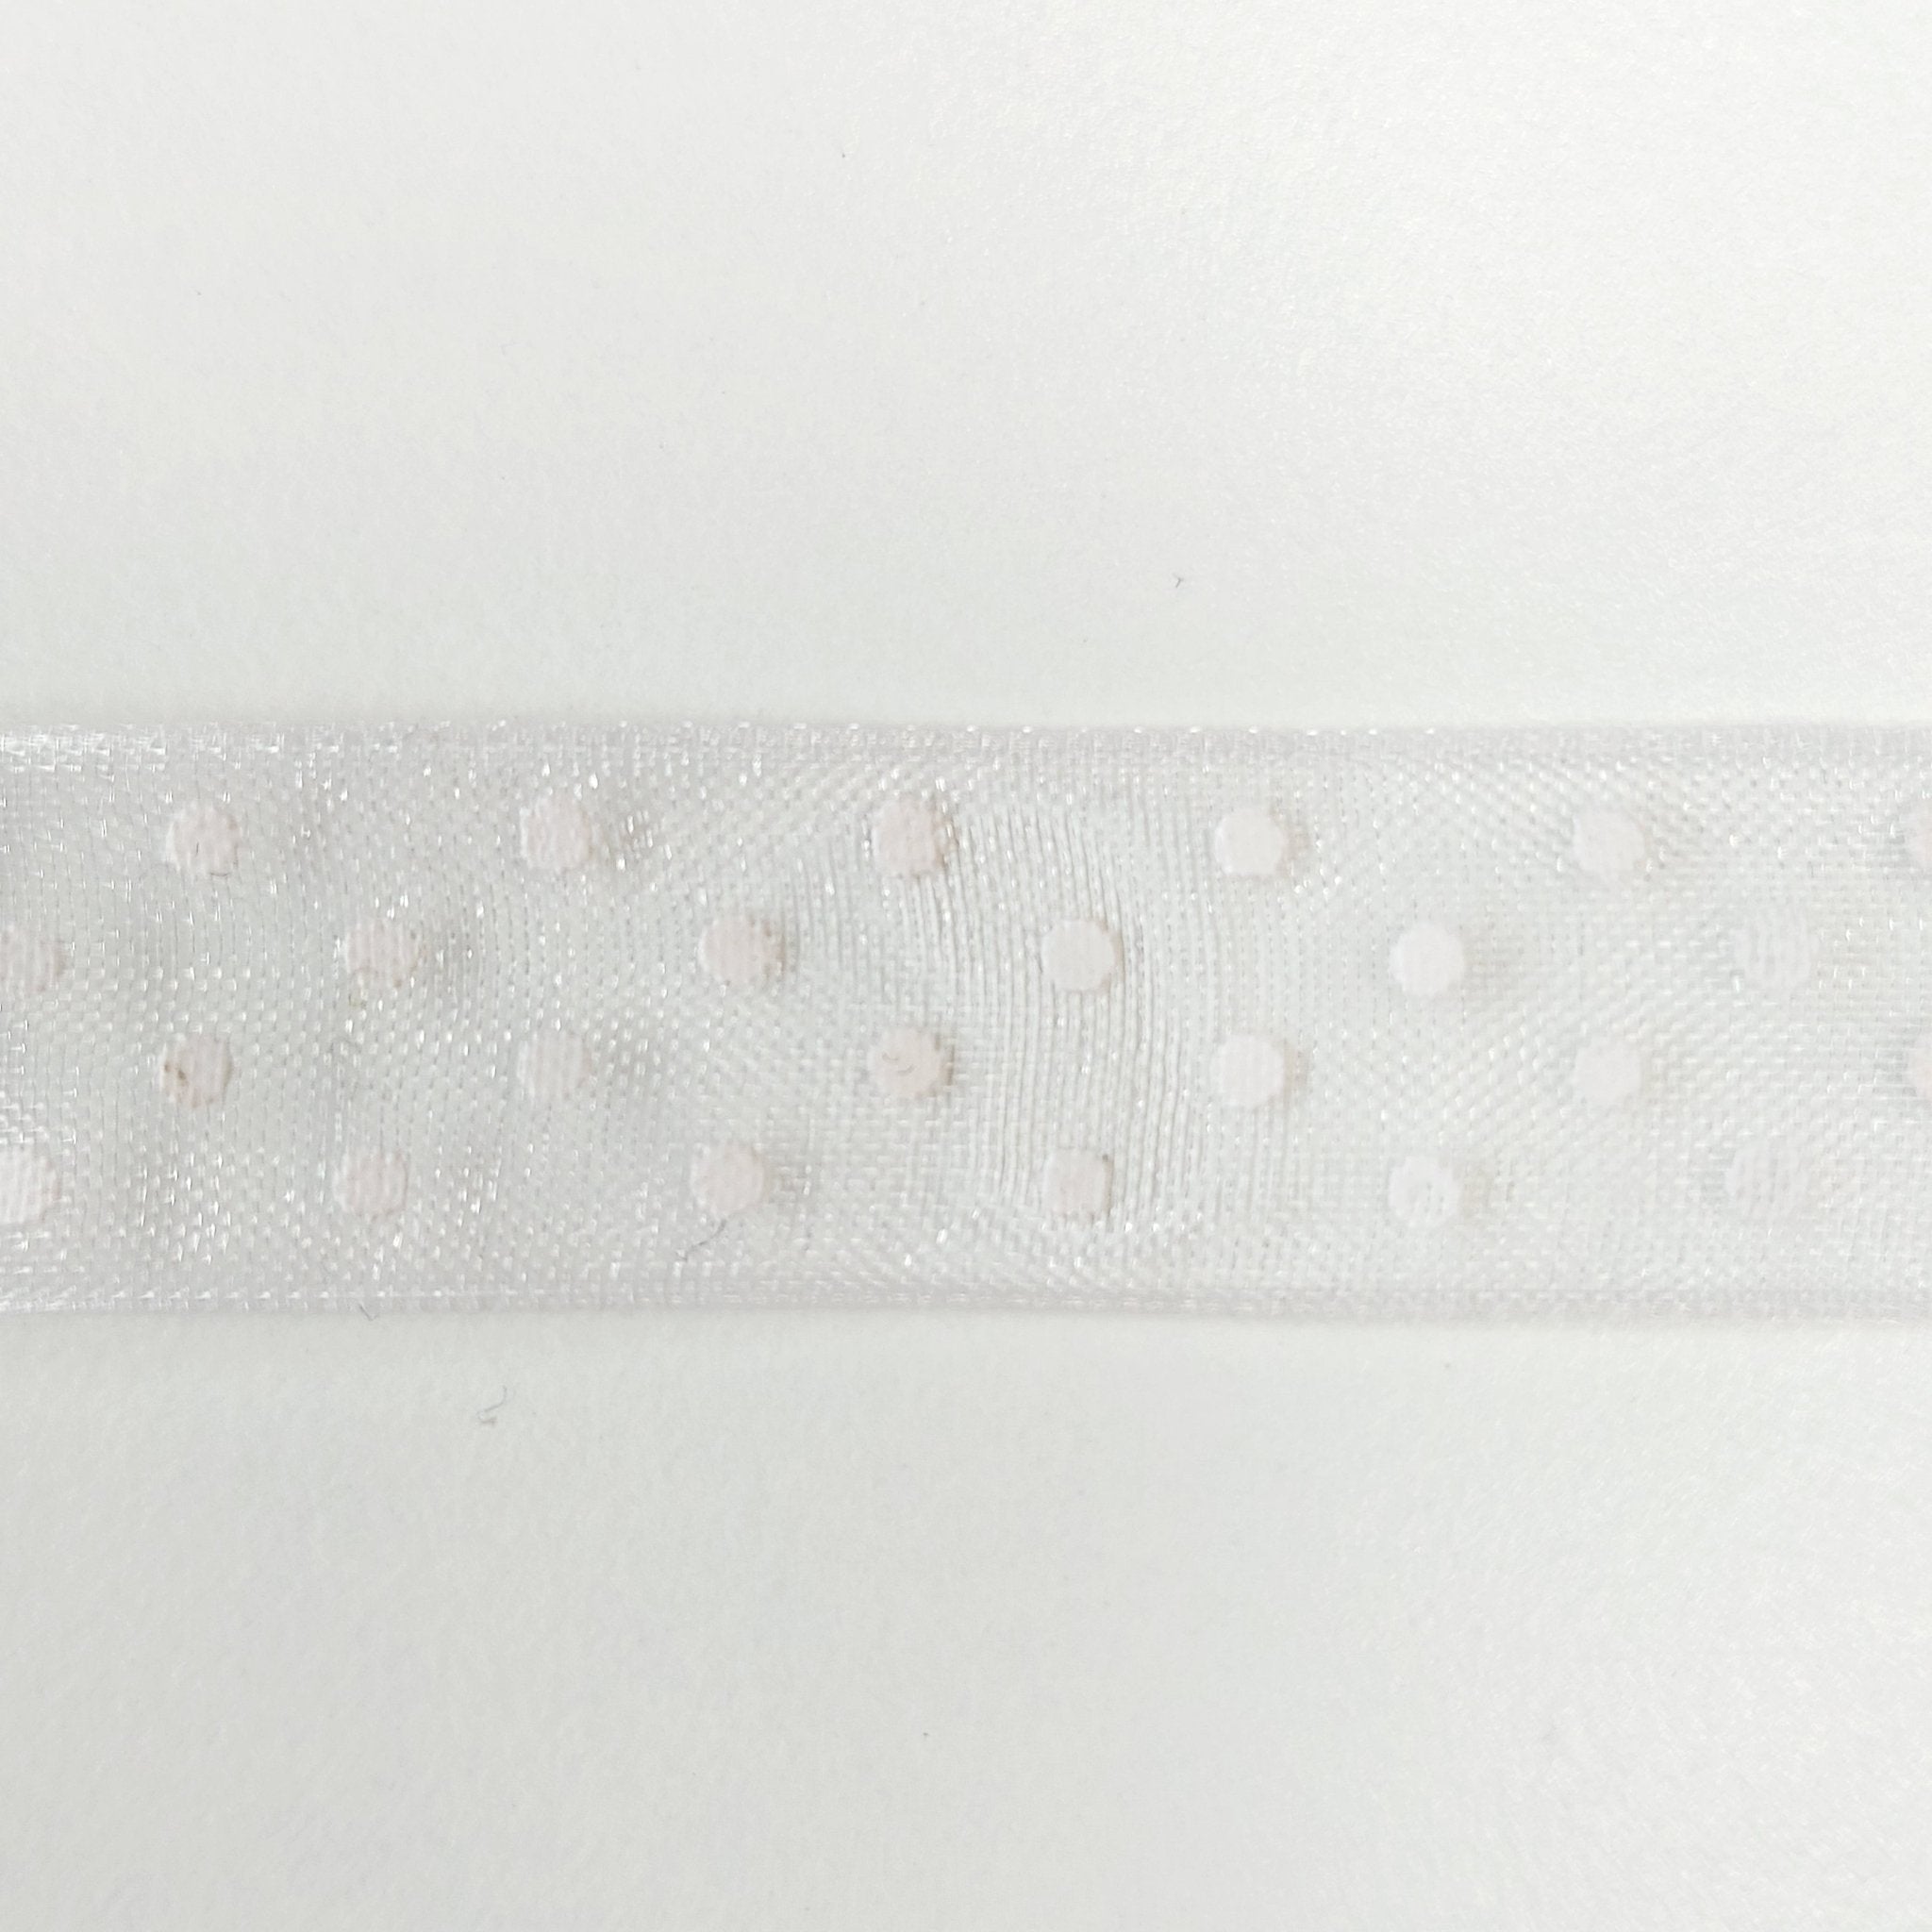 1/2 Inch Organdy ribbon - White Dots - Crafty Divas